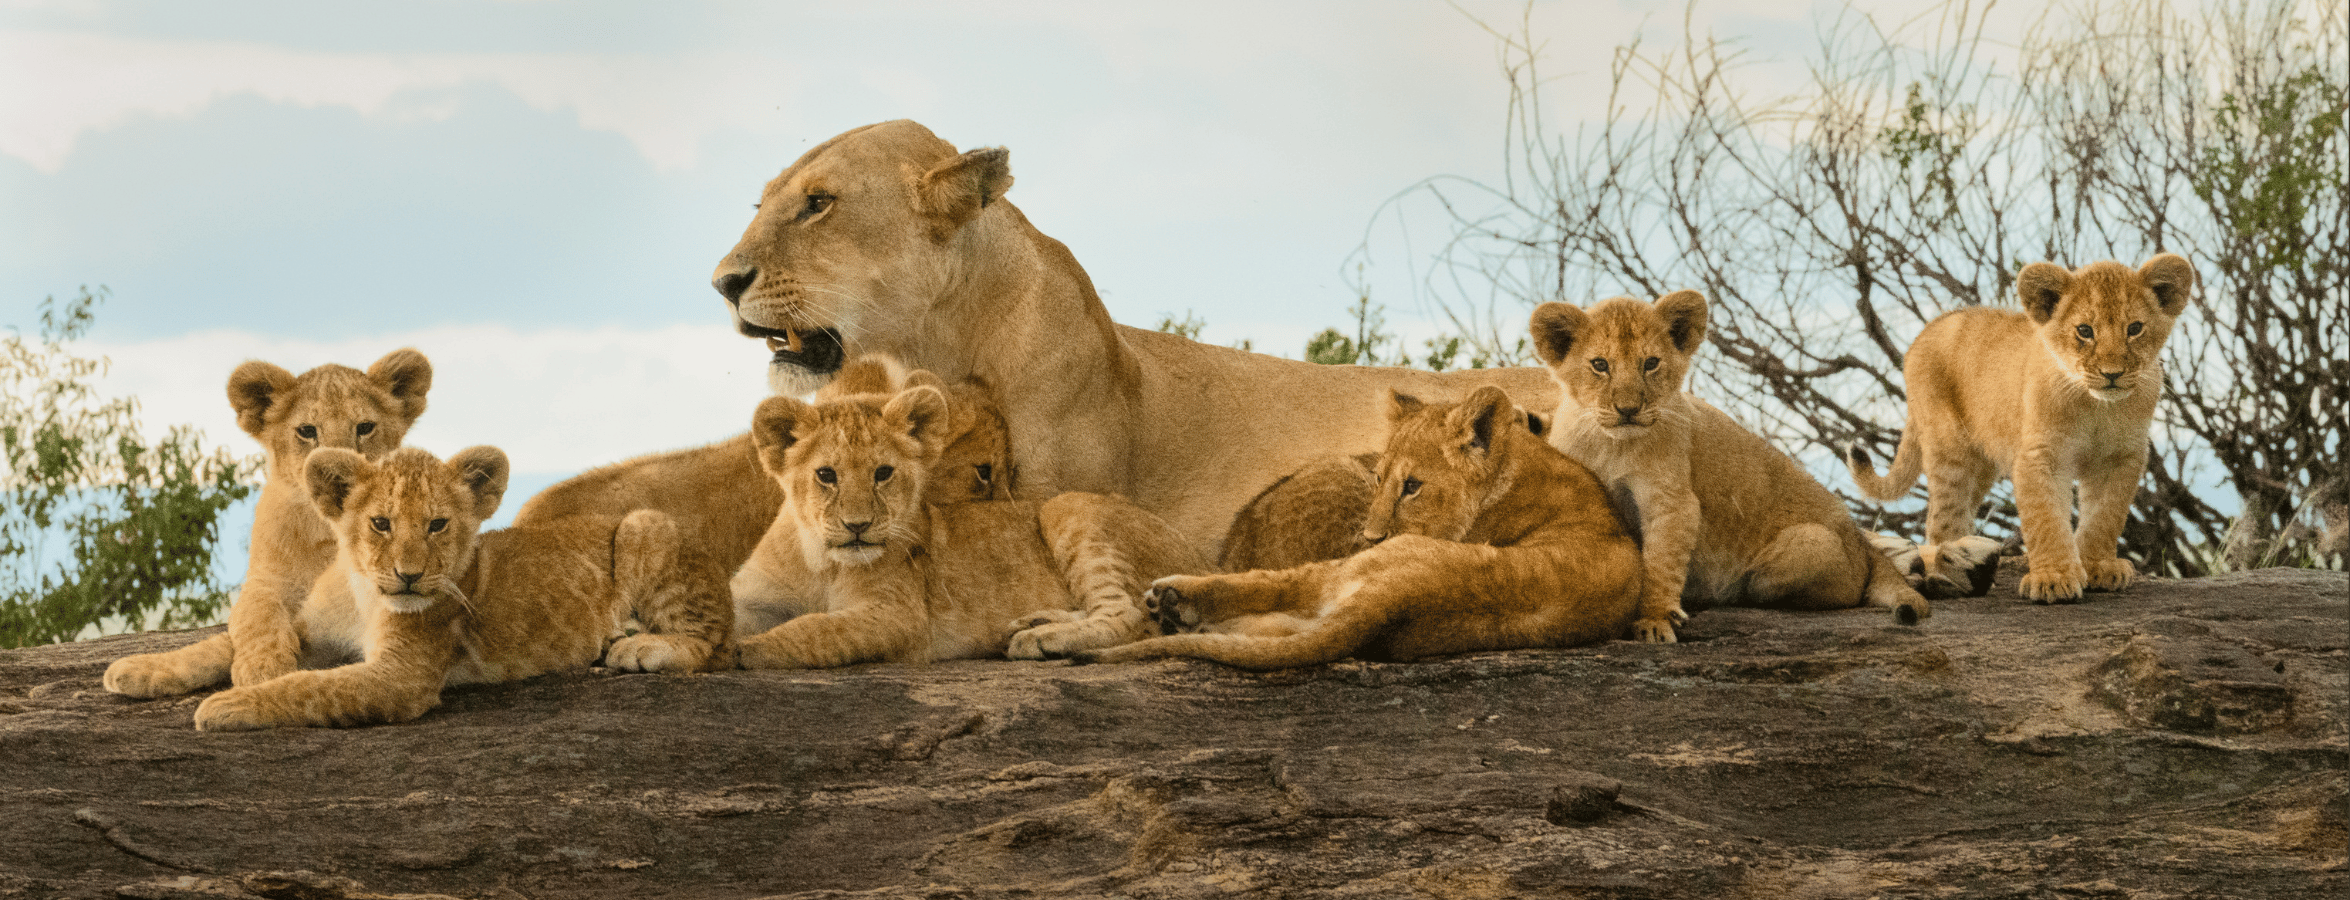 lejonfamilj vilar i afrika